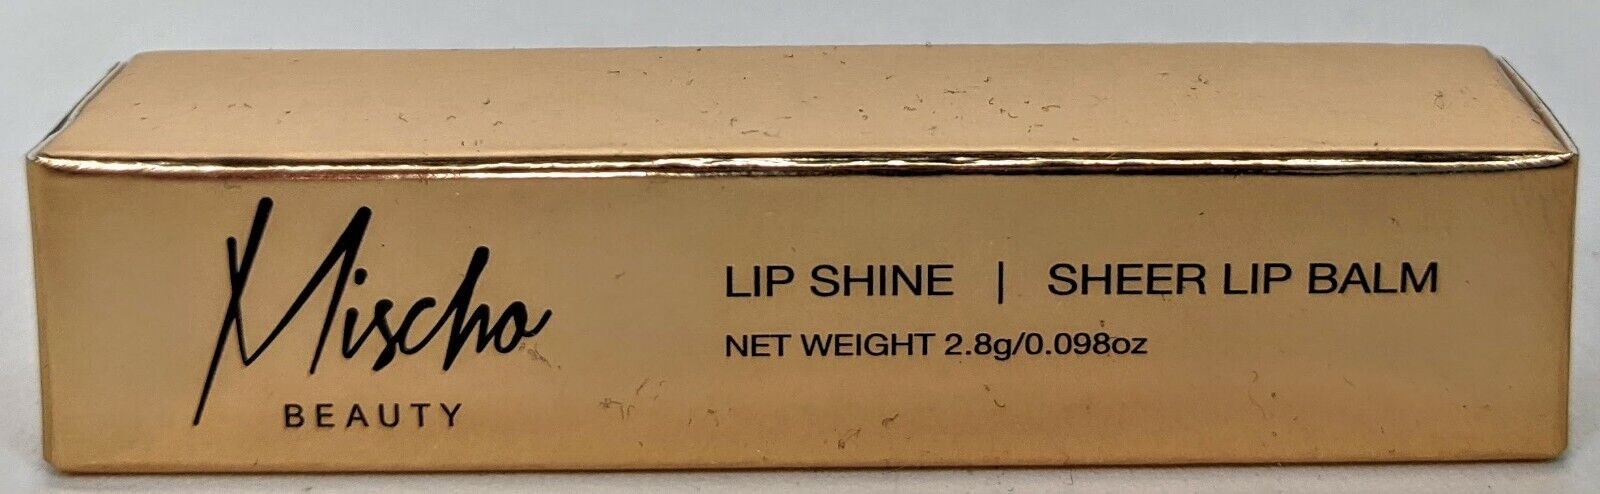 New MISCHO Beauty LIP SHINE Sheer Lip Balm - Full Size 2.8 g NIB - Ships FREE!